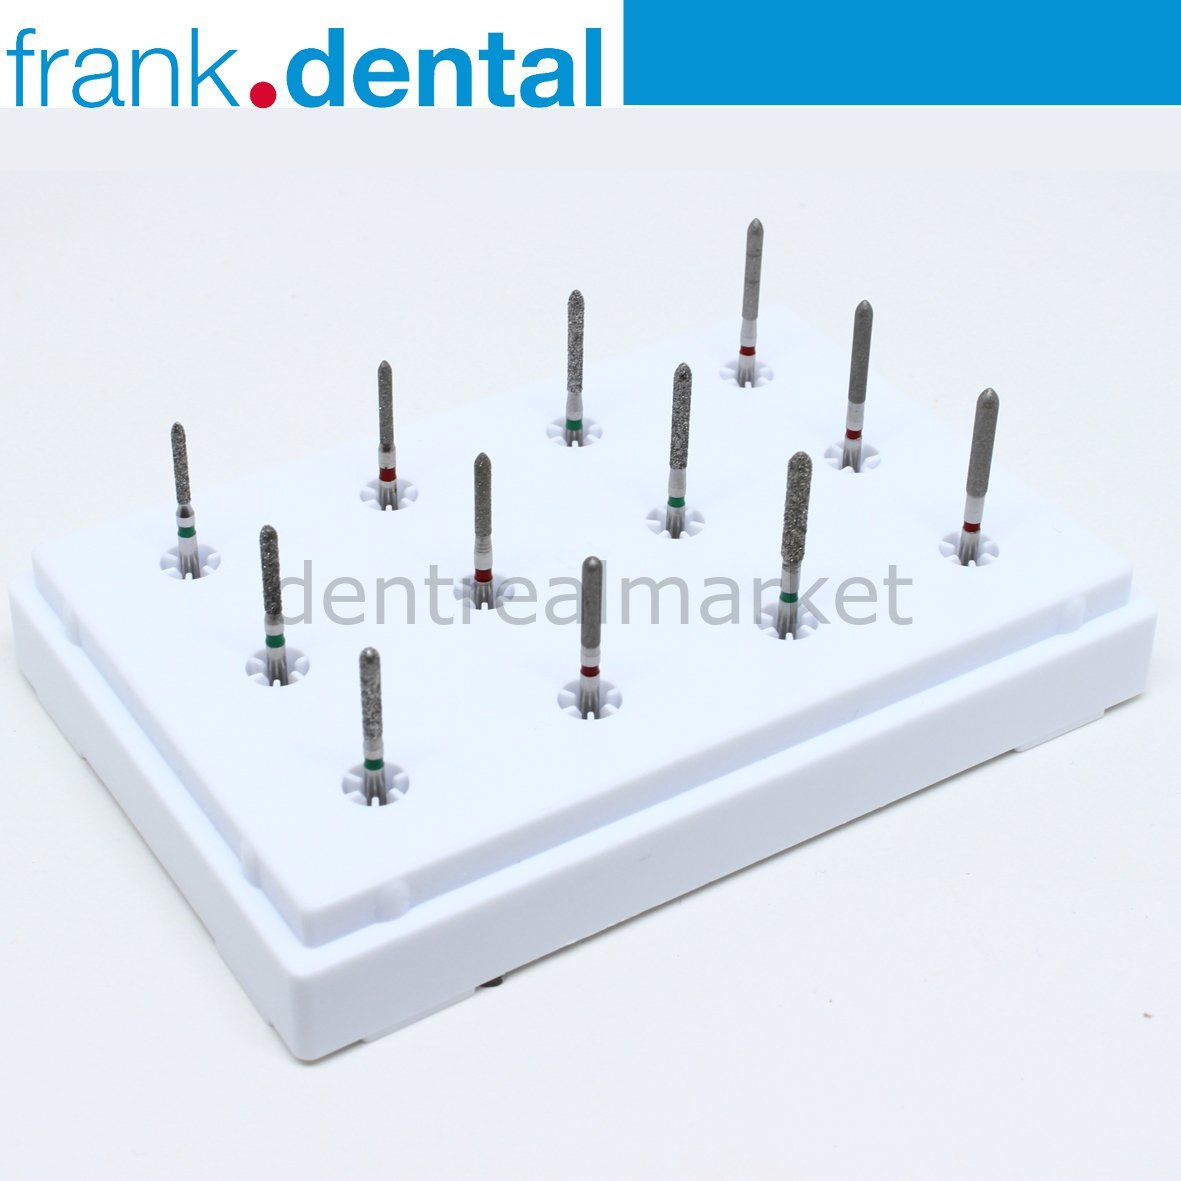 DentrealStore - Frank Dental Diamond Easy Chamfer Cut Bur Set